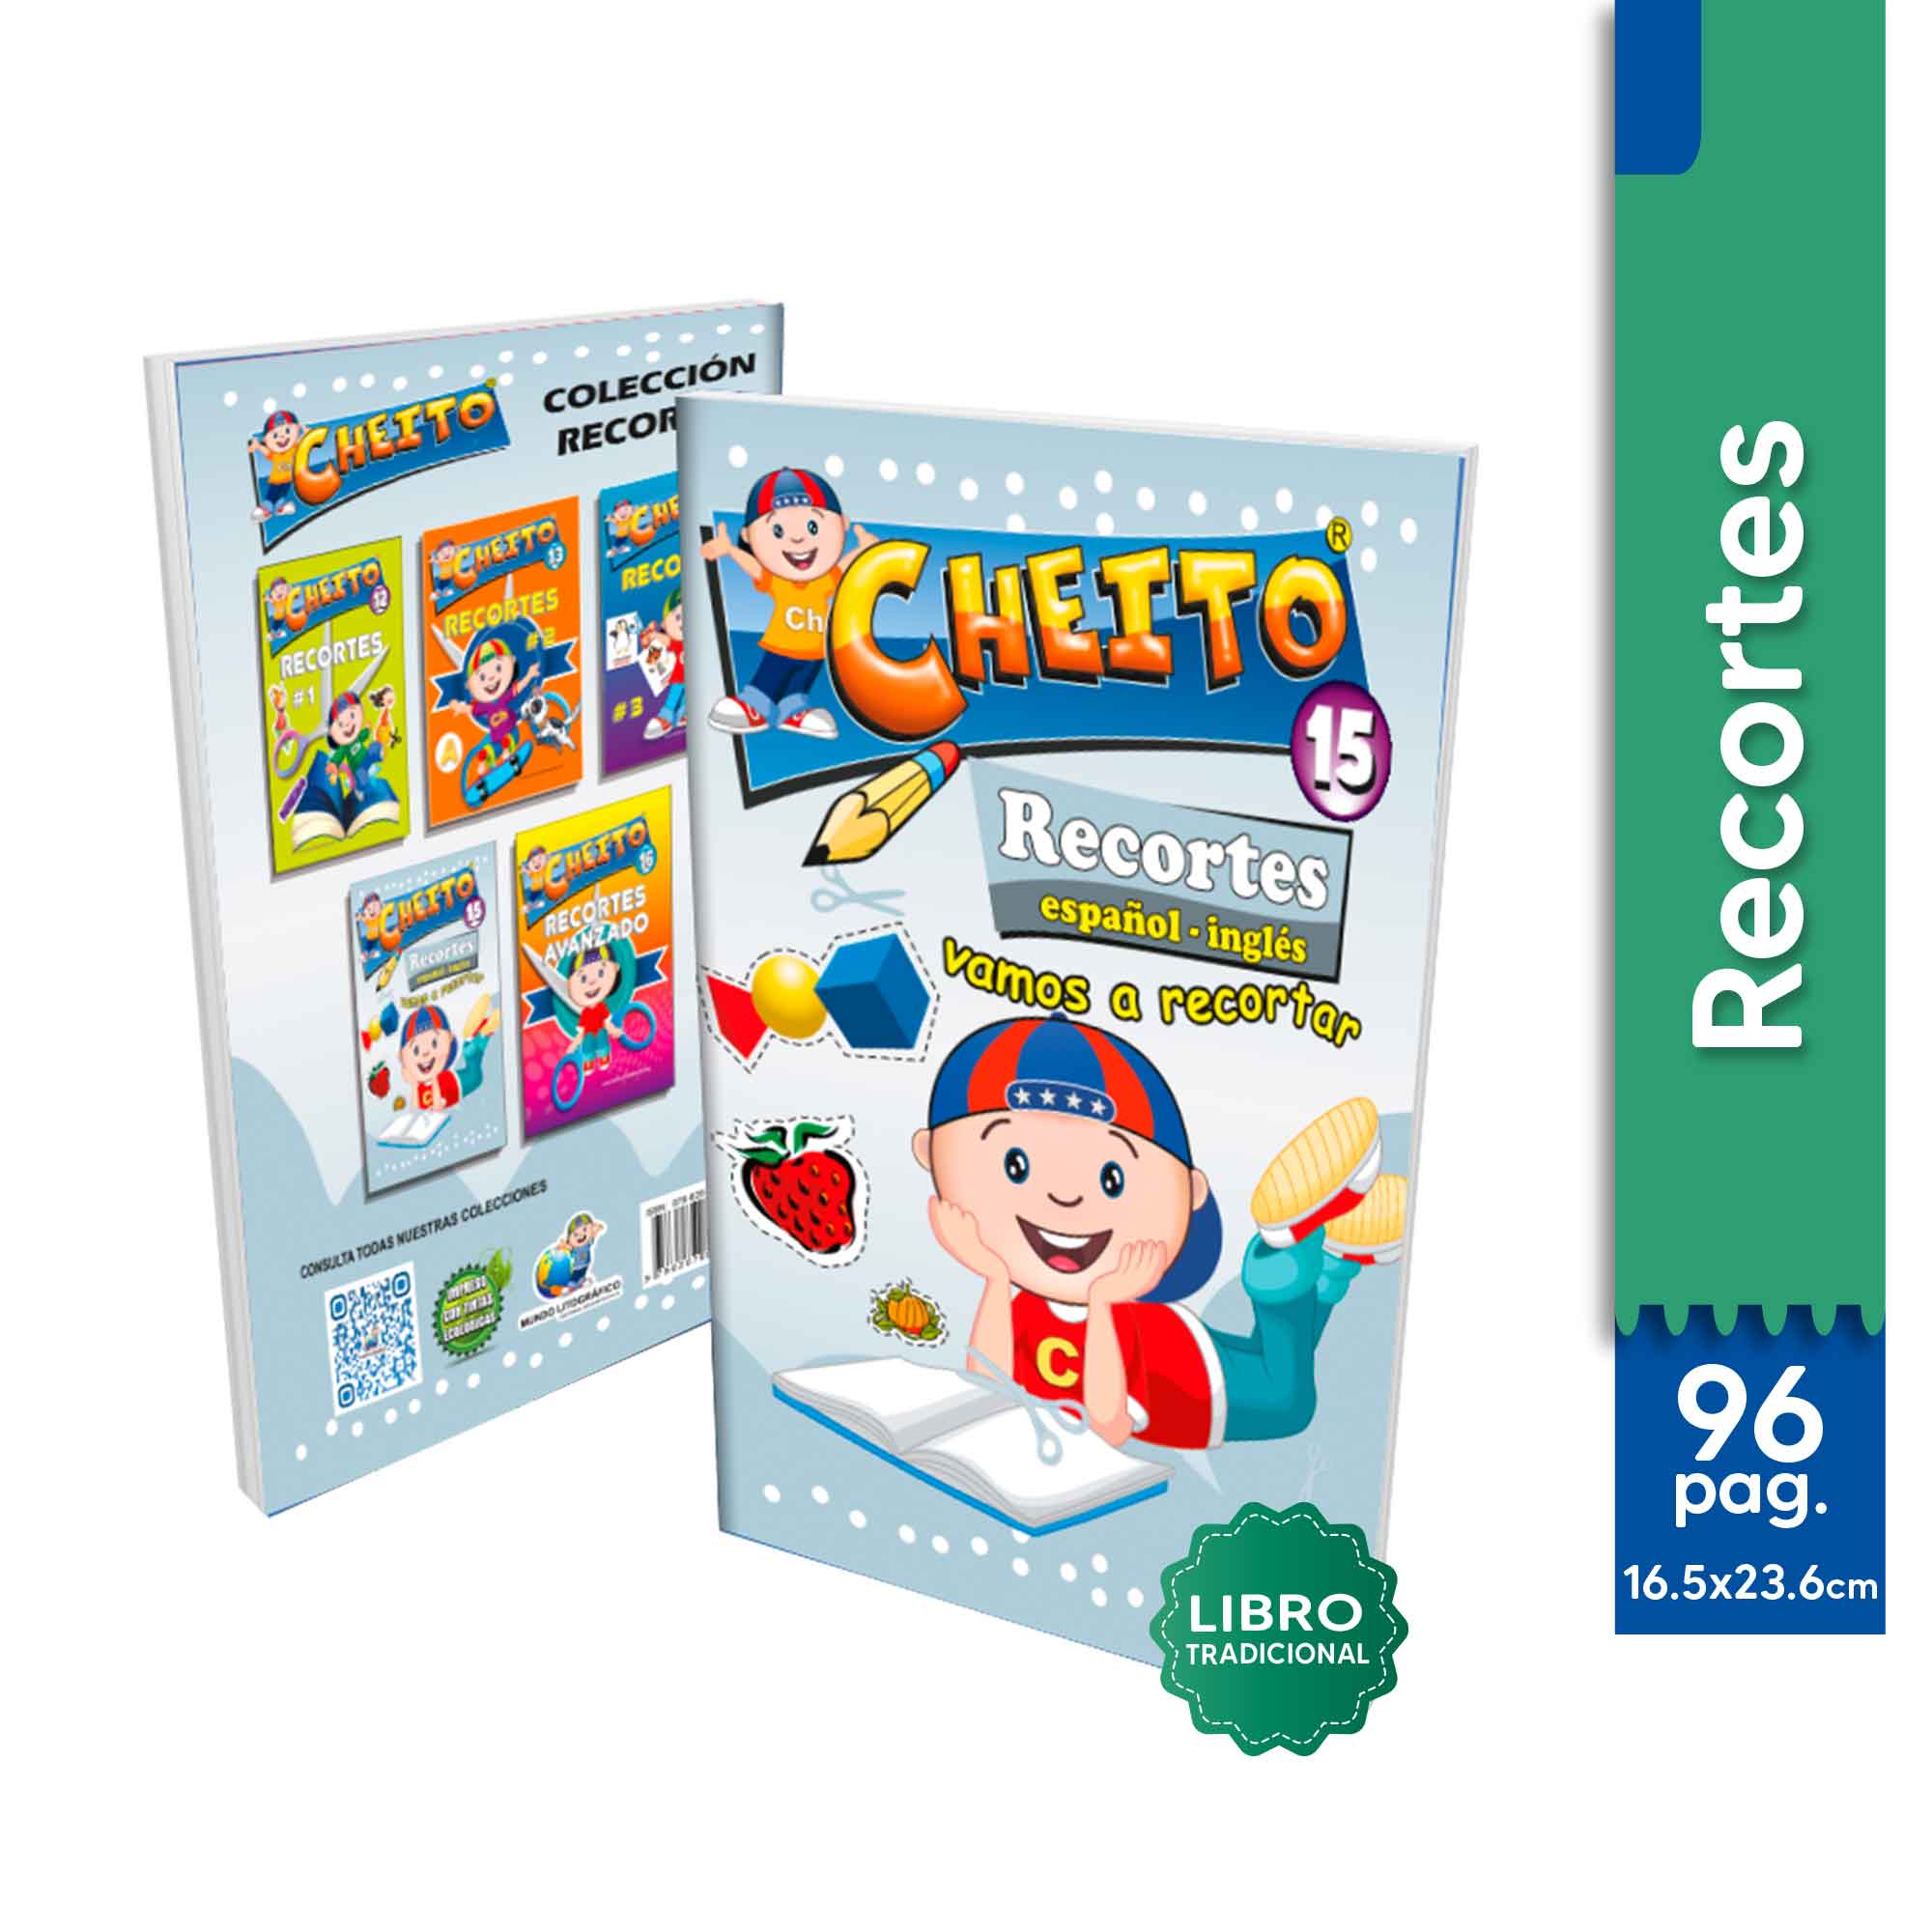 Cheito 15 Recortes Español - Inglés